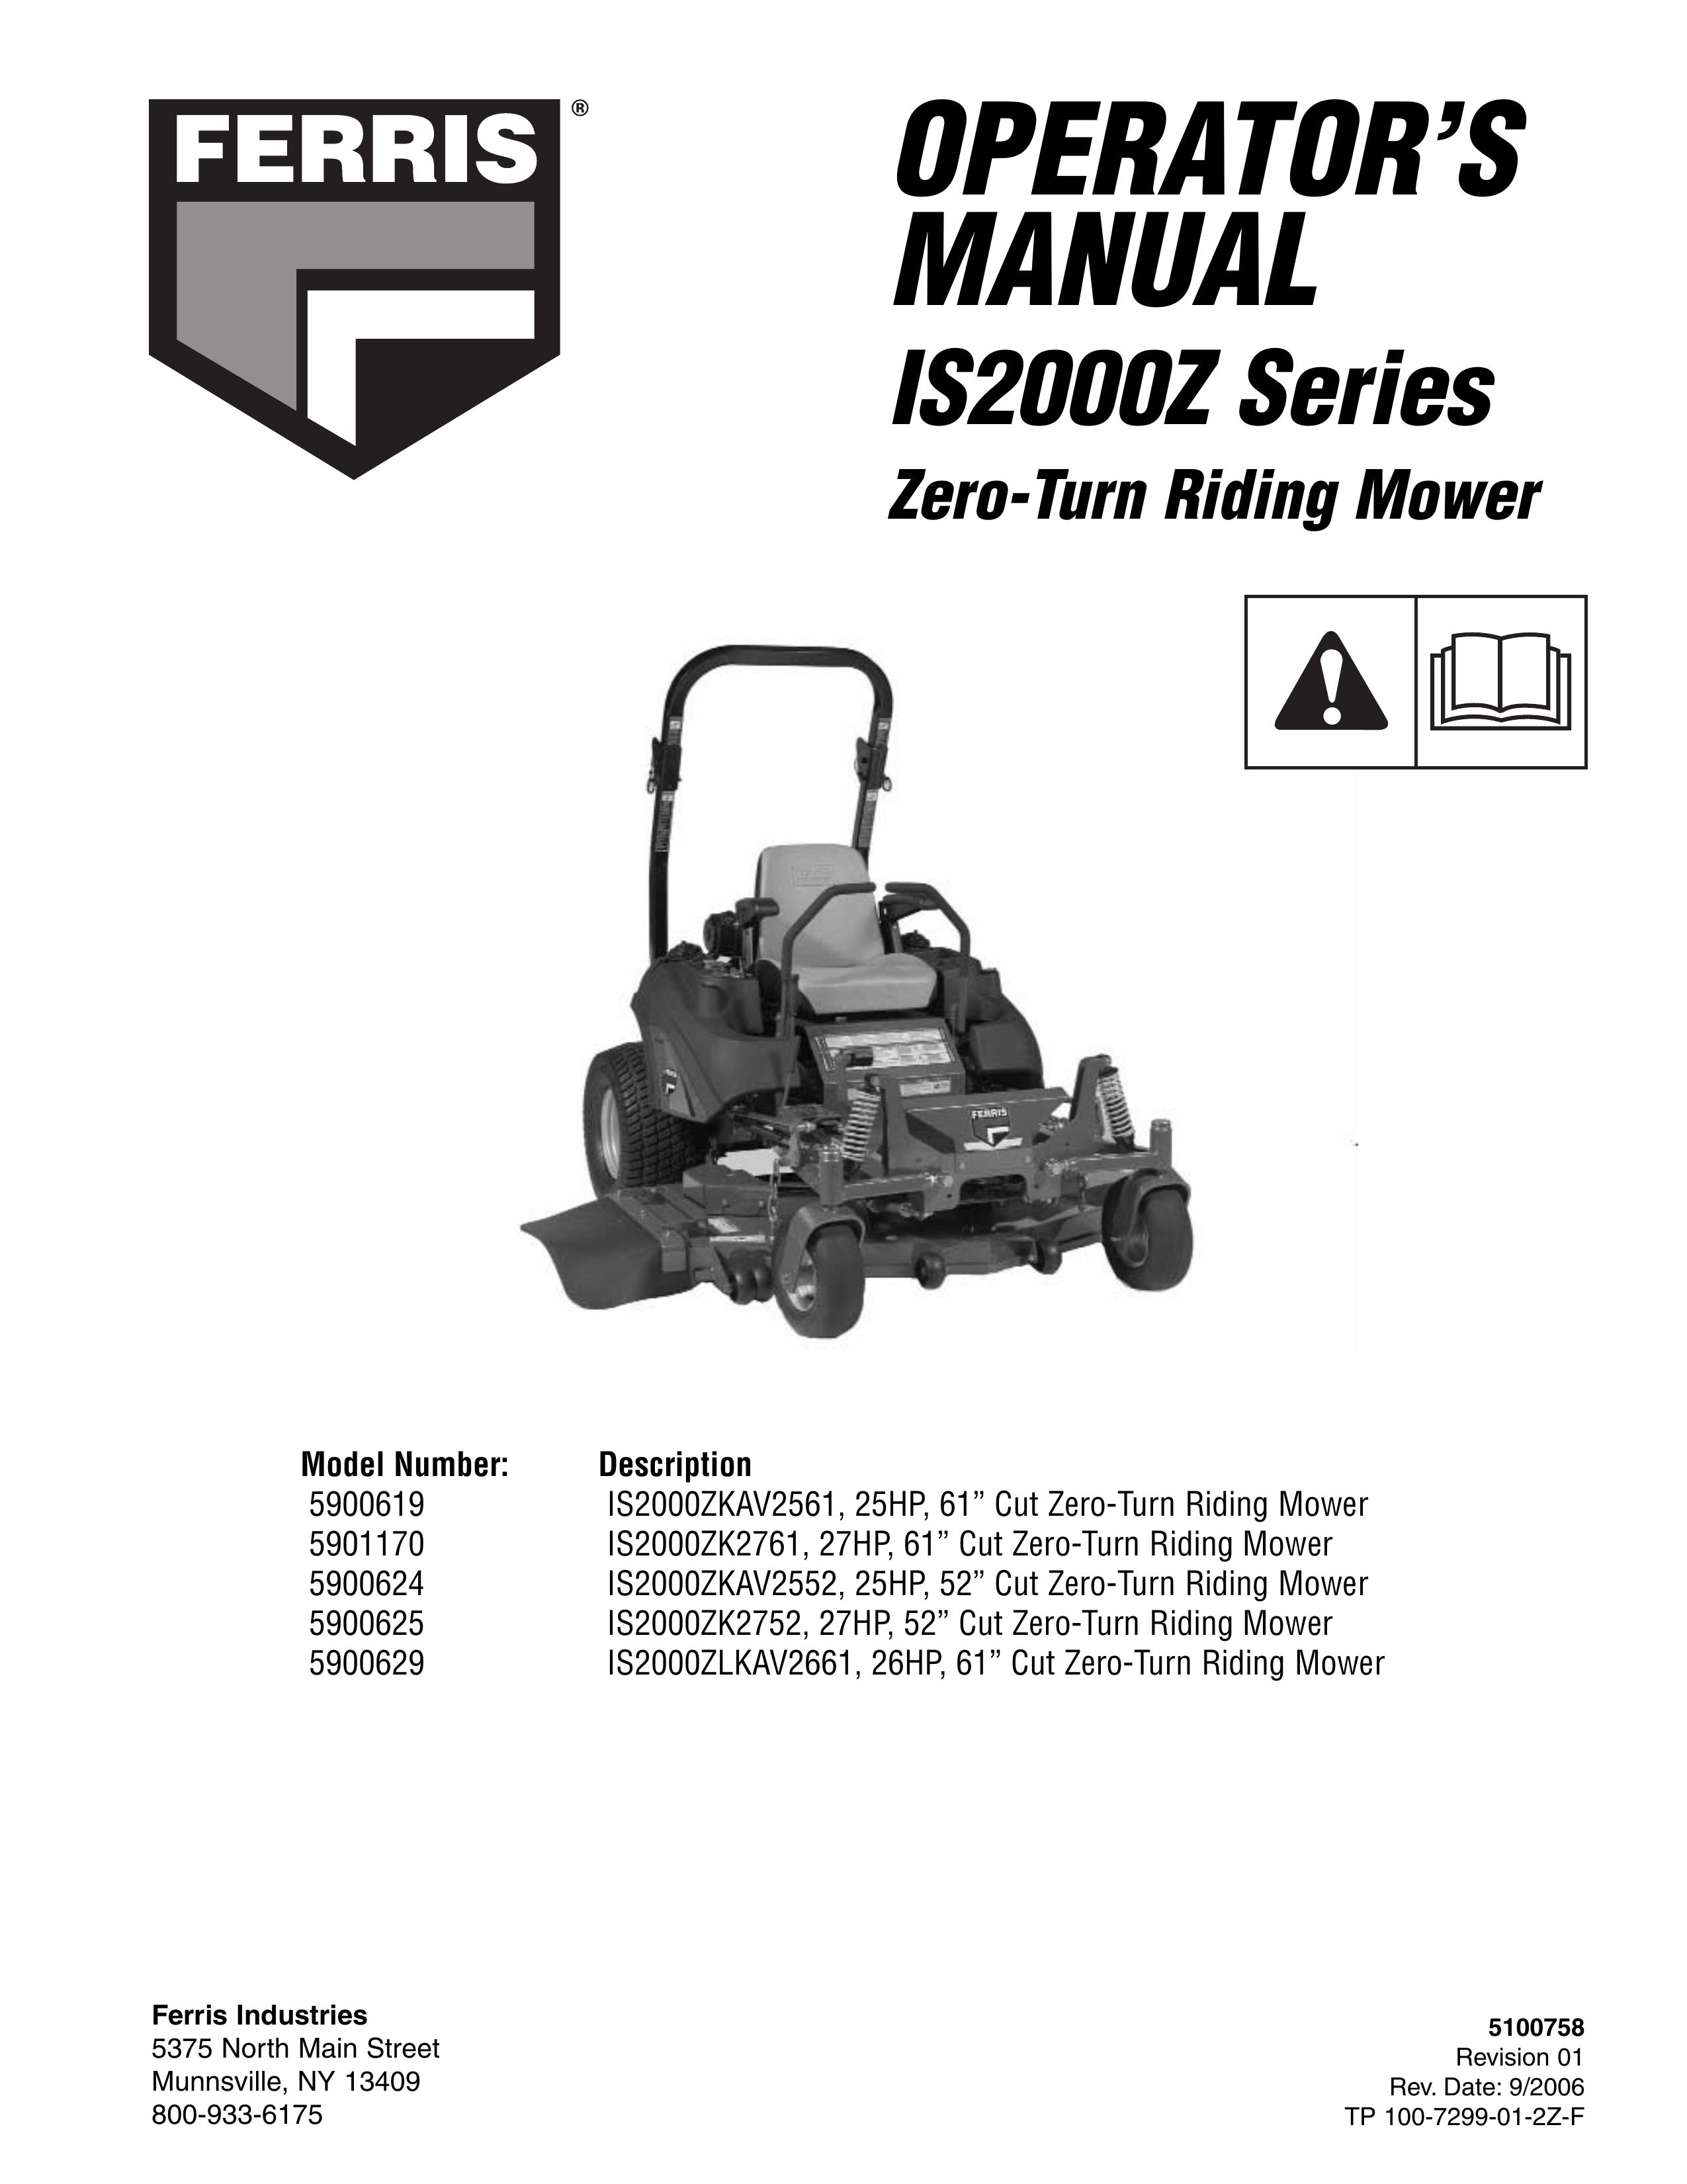 Ferris Industries 5900624 Lawn Mower User Manual